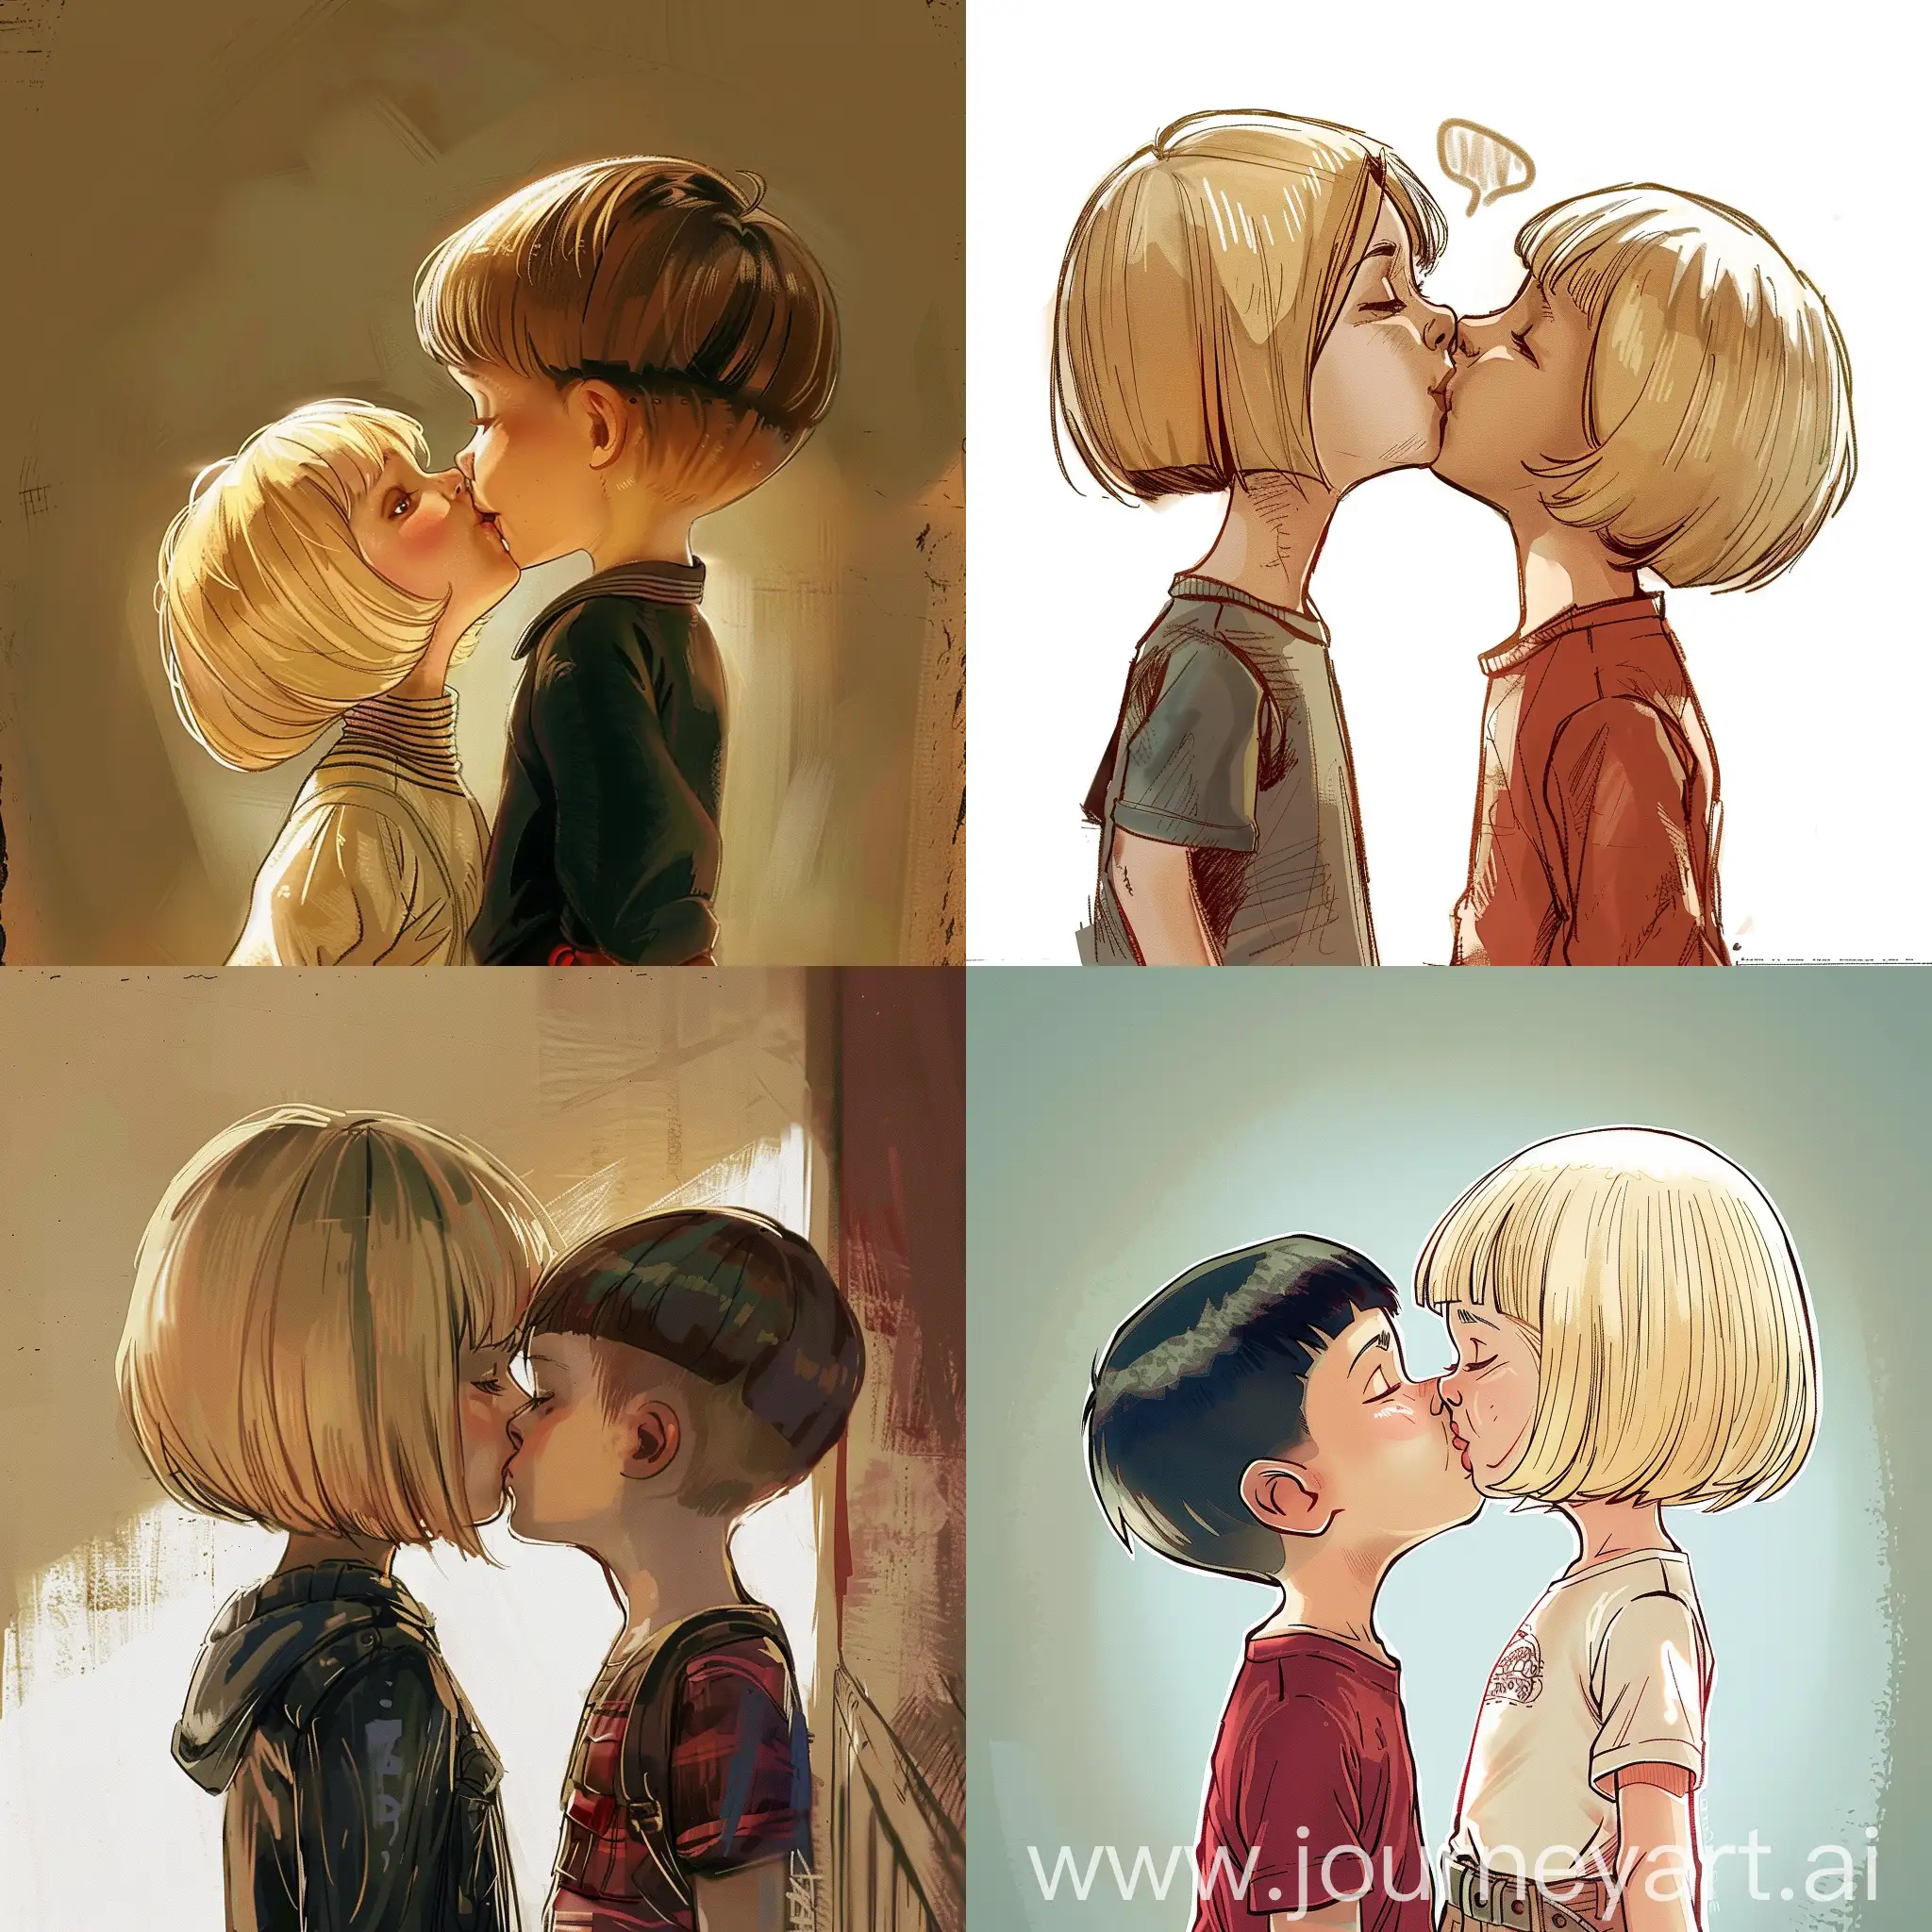 Девушка блондинка с каре, целует парня